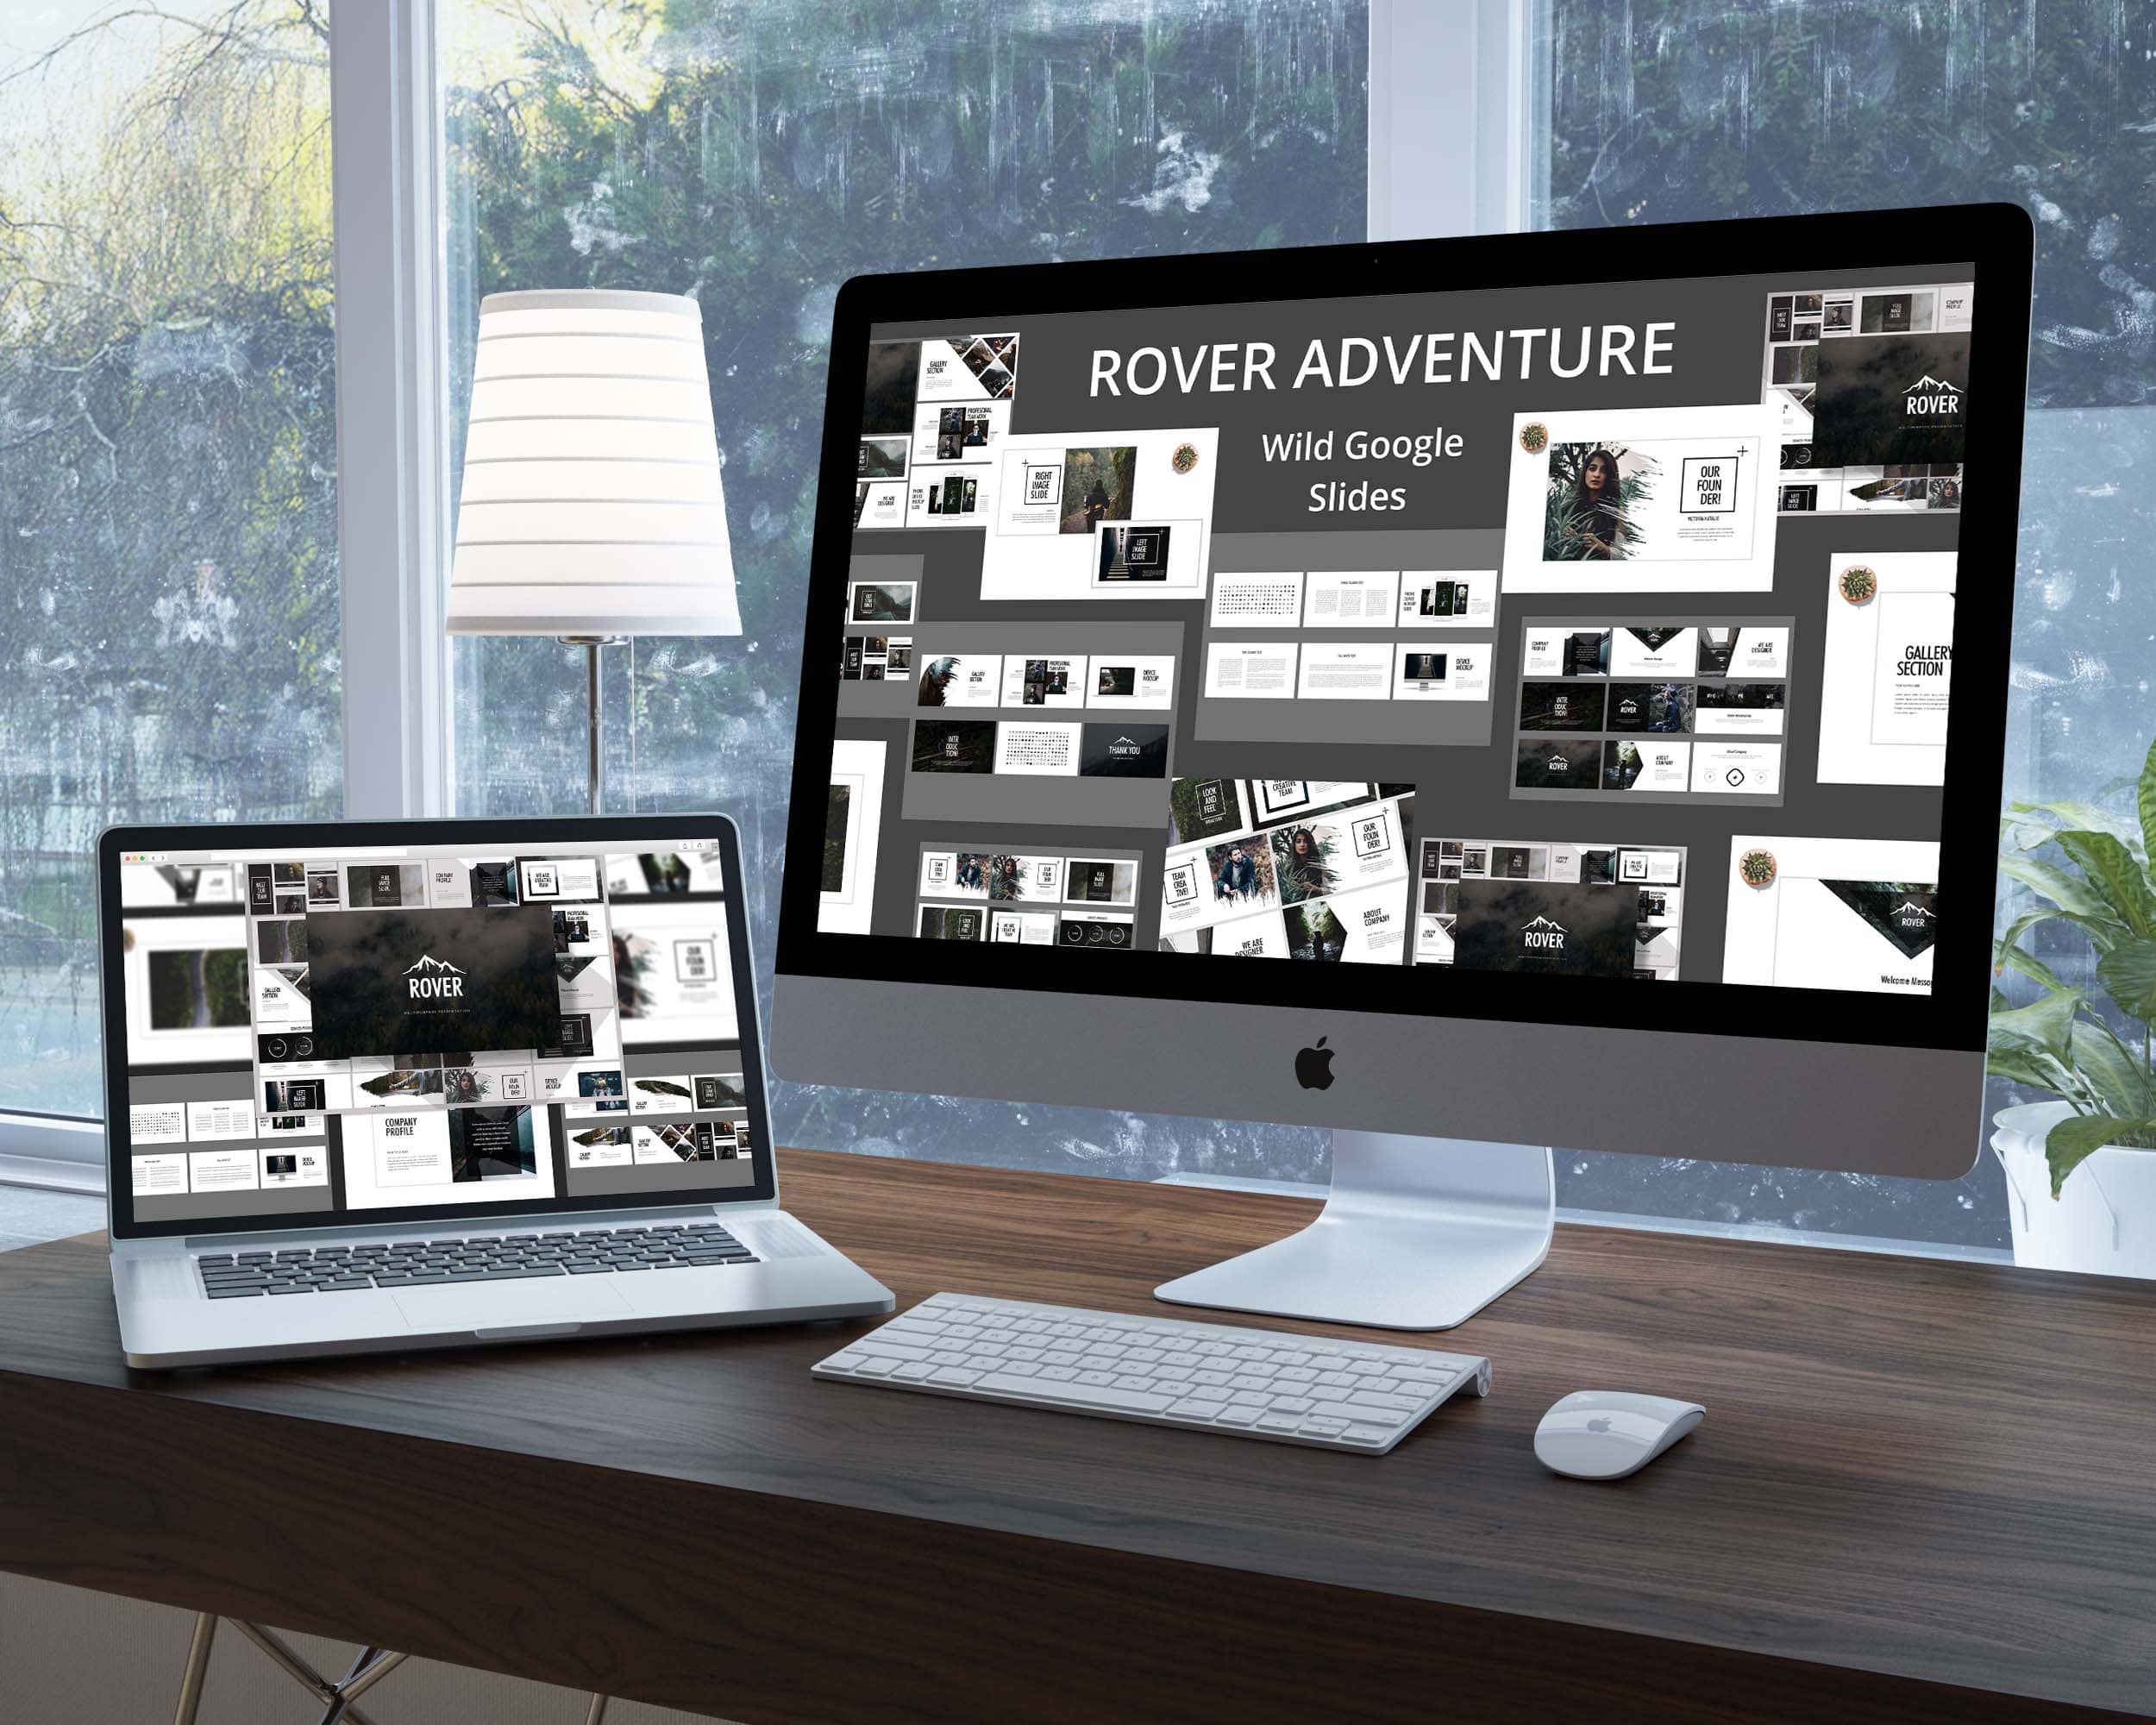 Rover Adventure - Wild Google Slides - Mockup on Laptop&Desktop.